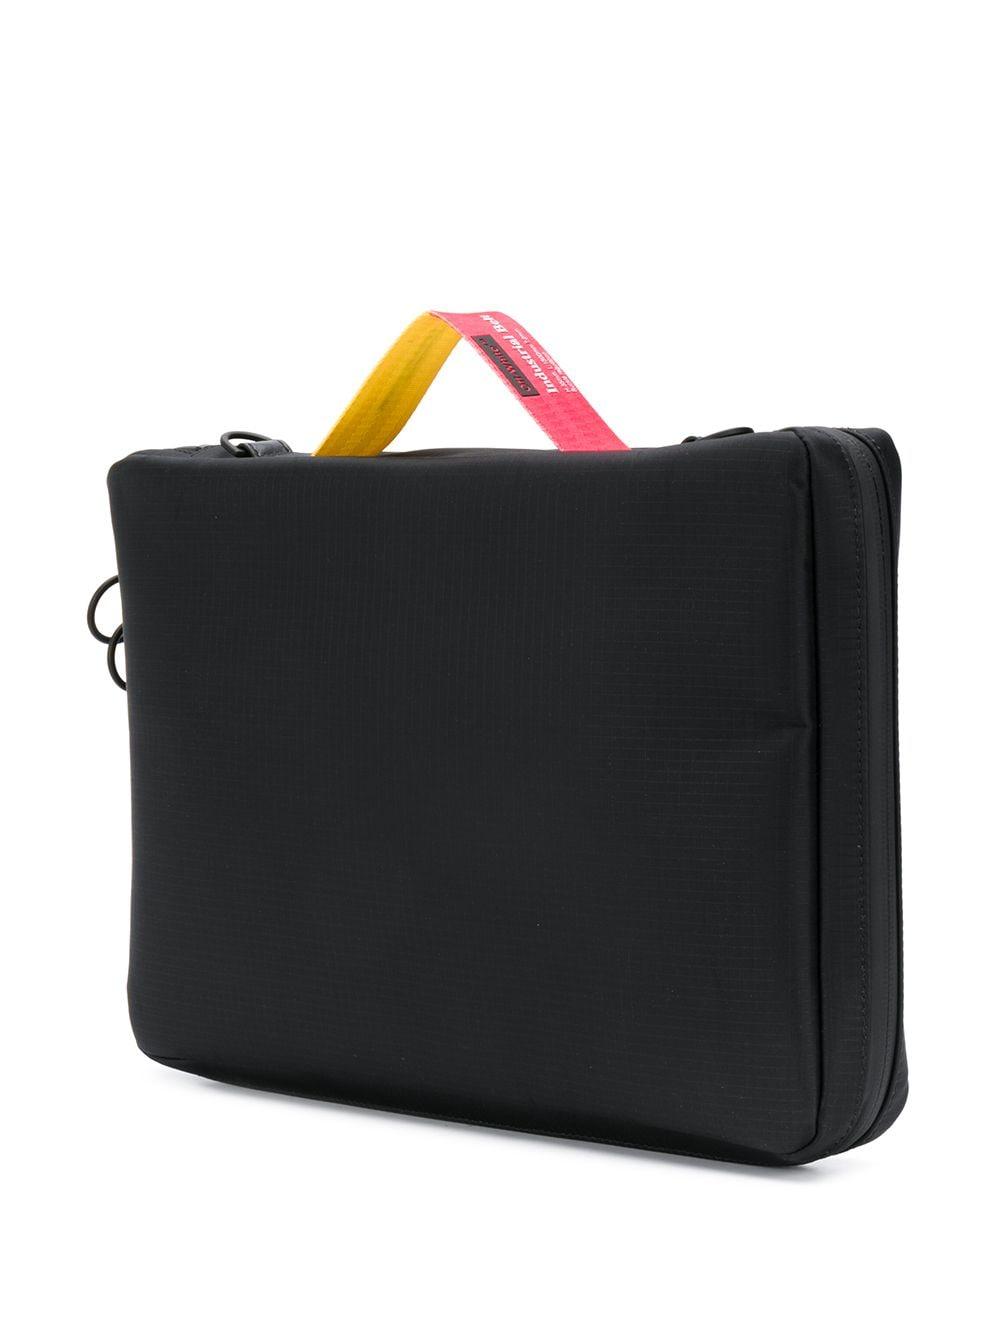 Off-White c/o Virgil Abloh Industrial Strap Laptop Bag in Black | Lyst